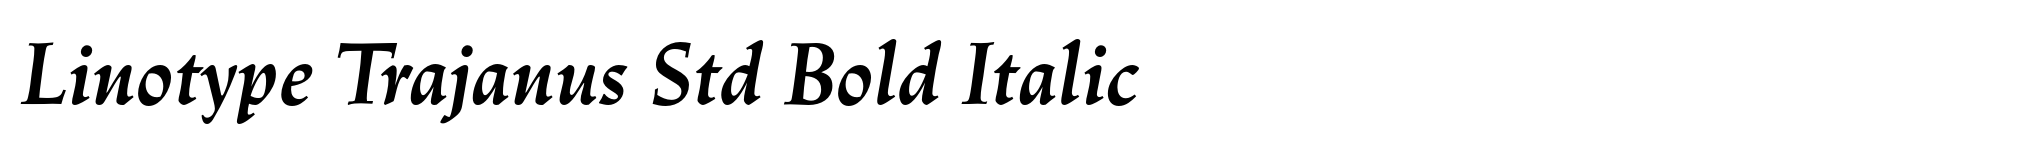 Linotype Trajanus Std Bold Italic image